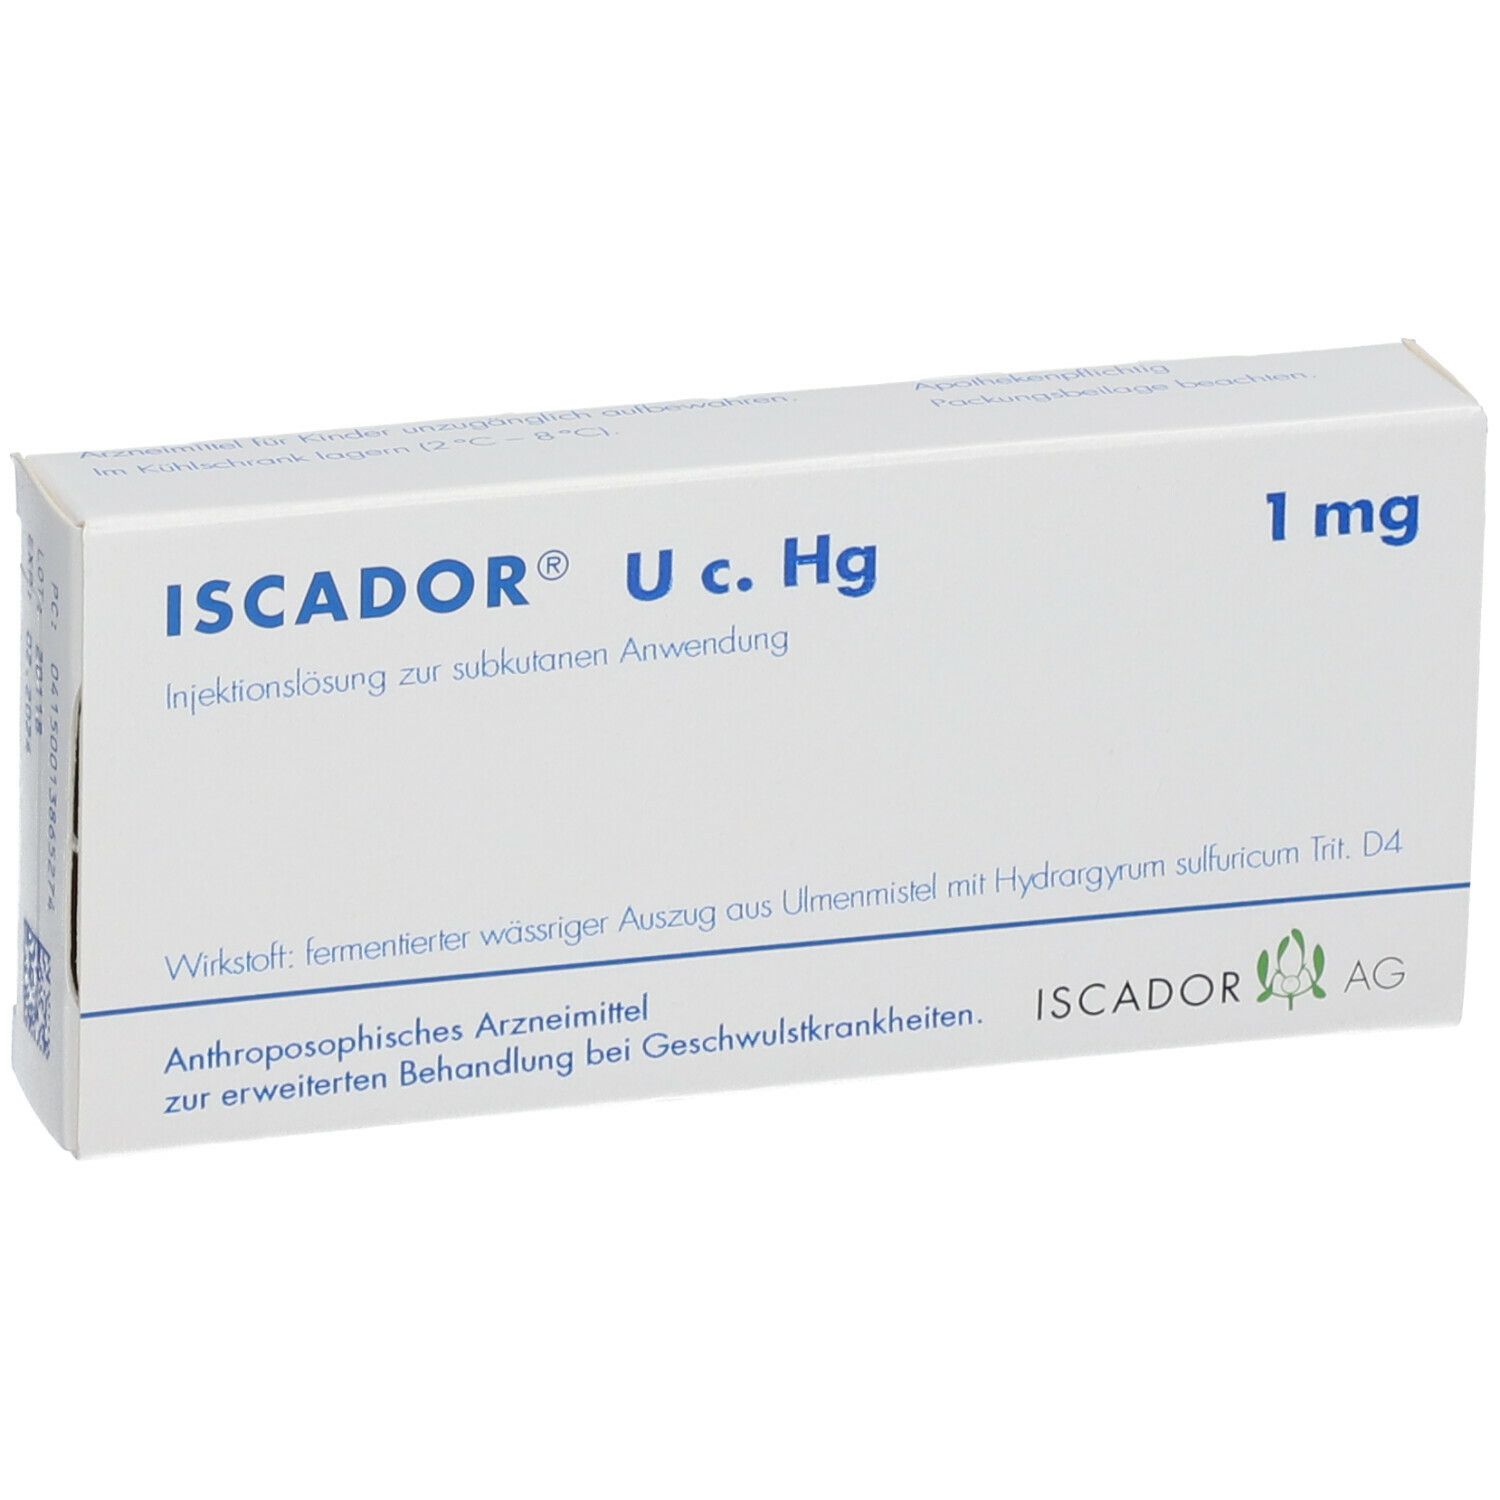 ISCADOR® U c. Hg 1 mg